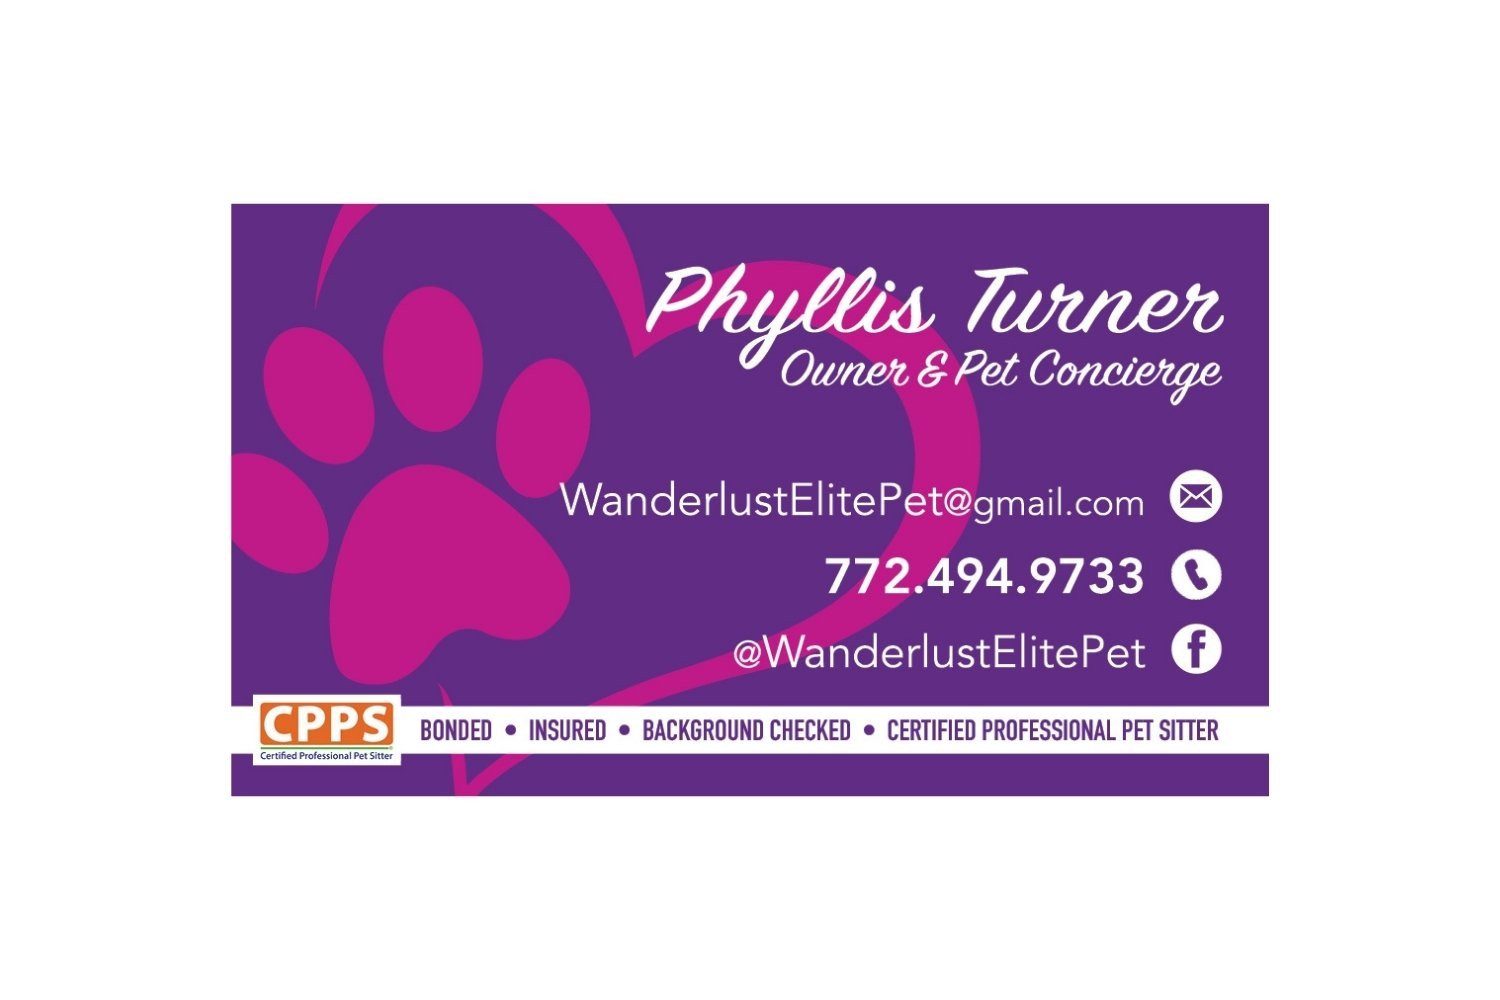 Wanderlust-pet-services-business-card